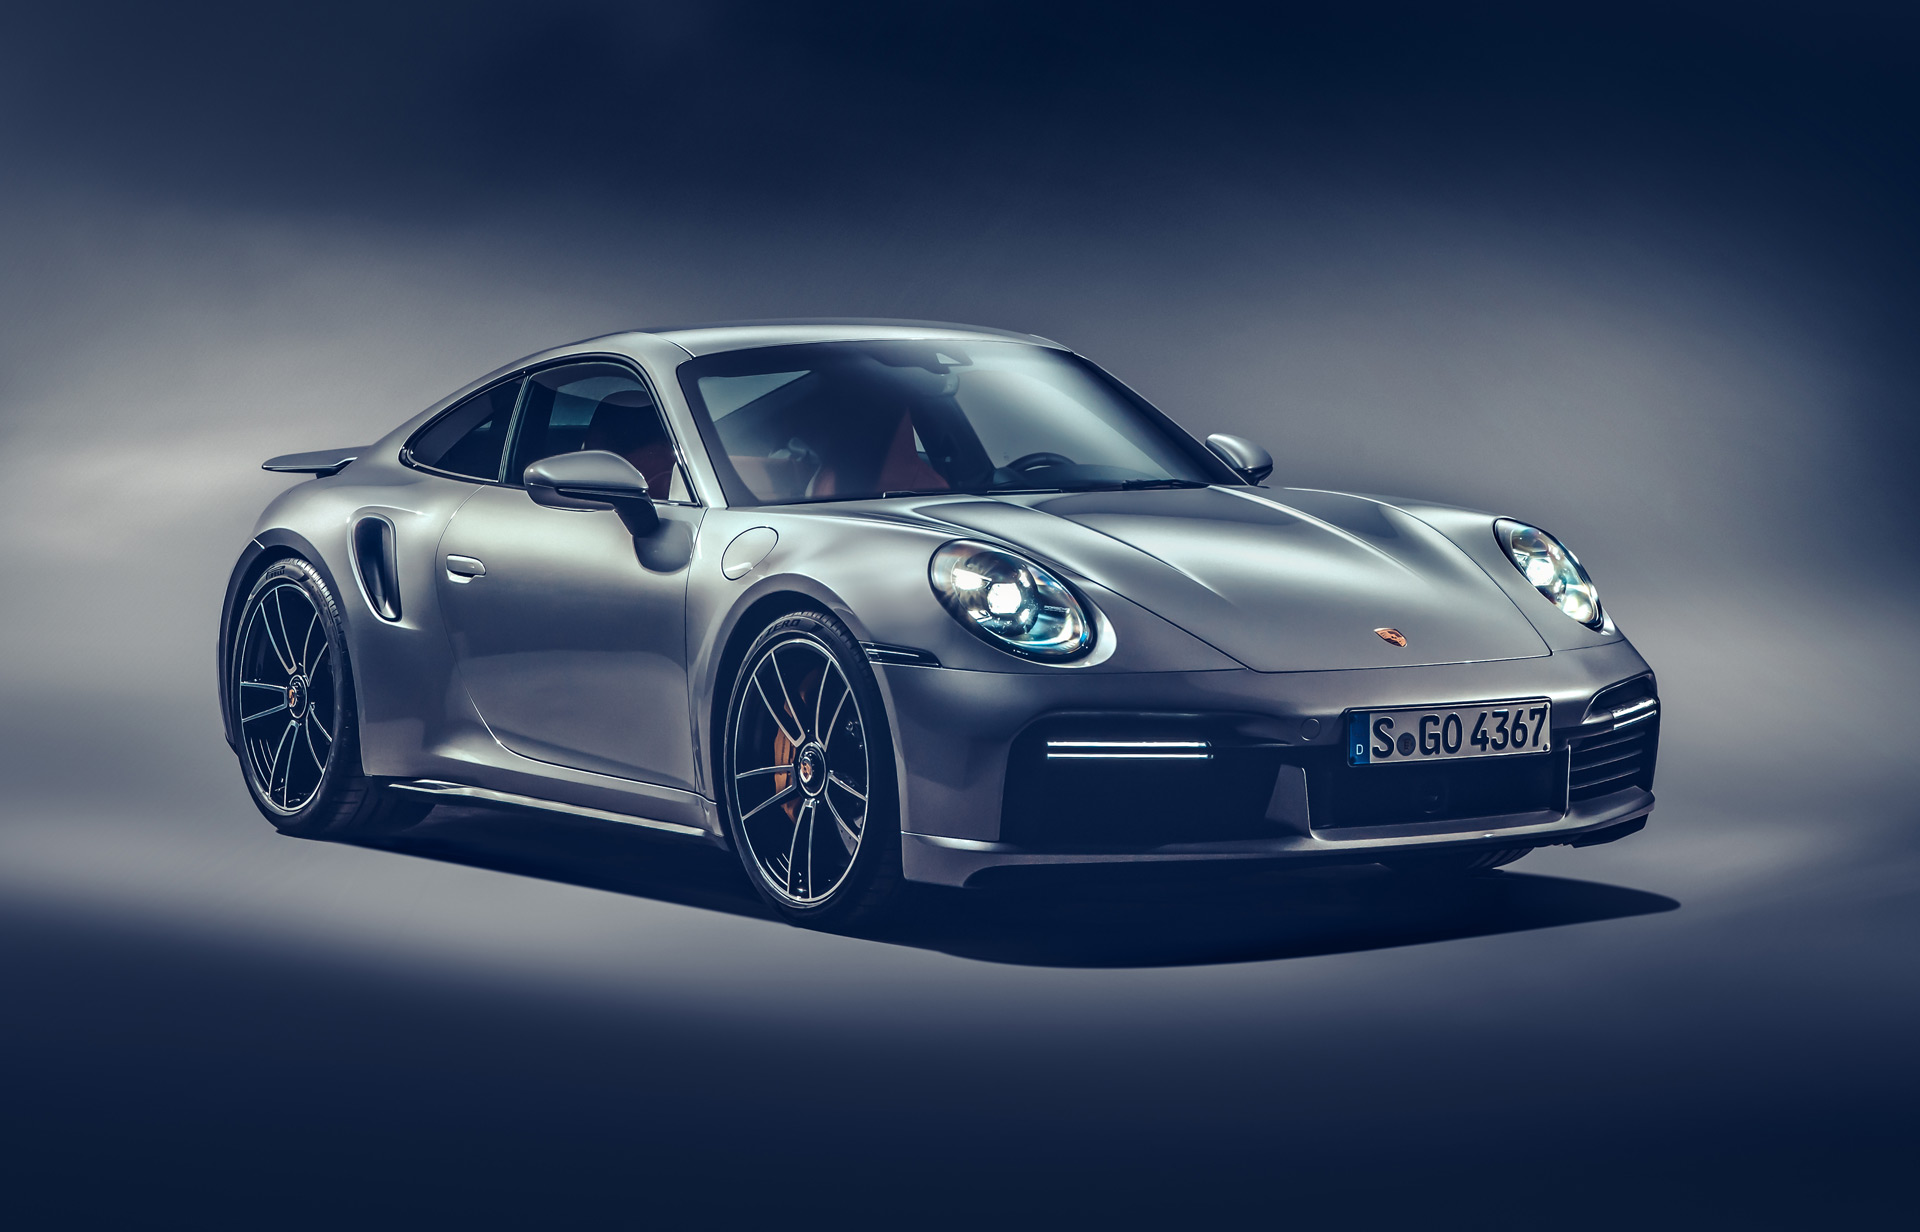 Porsche desvenda aerodinâmica ativa do novo 911 Turbo S Auto Drive